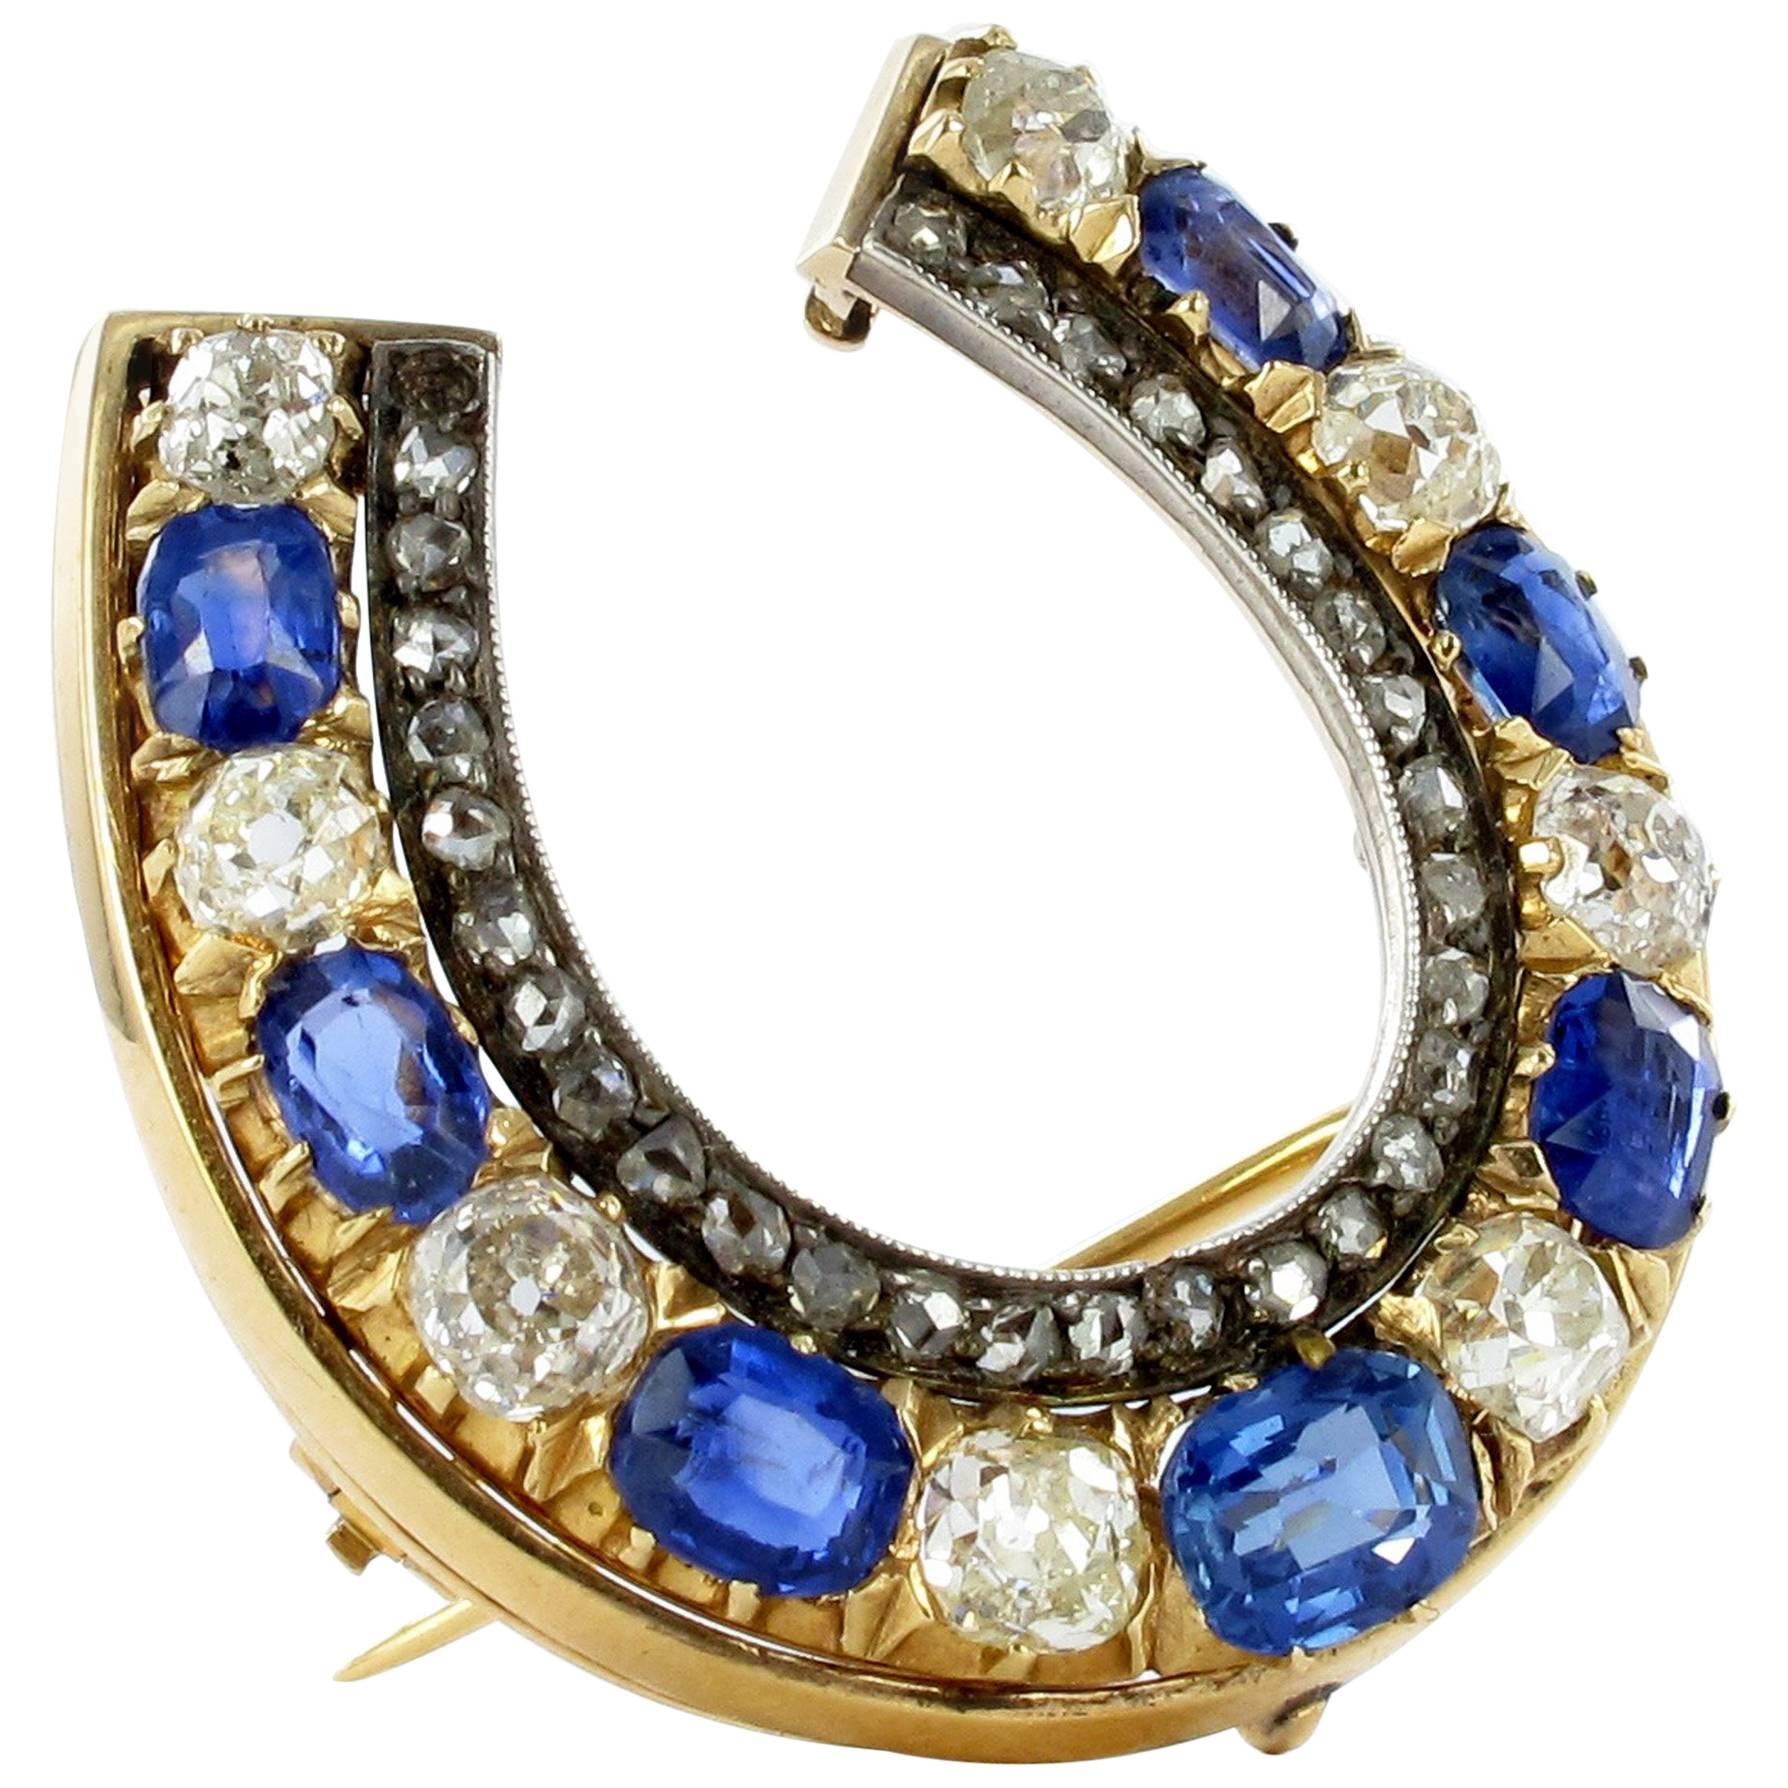 Charming Antique Sapphire and Diamond Pendant Brooch